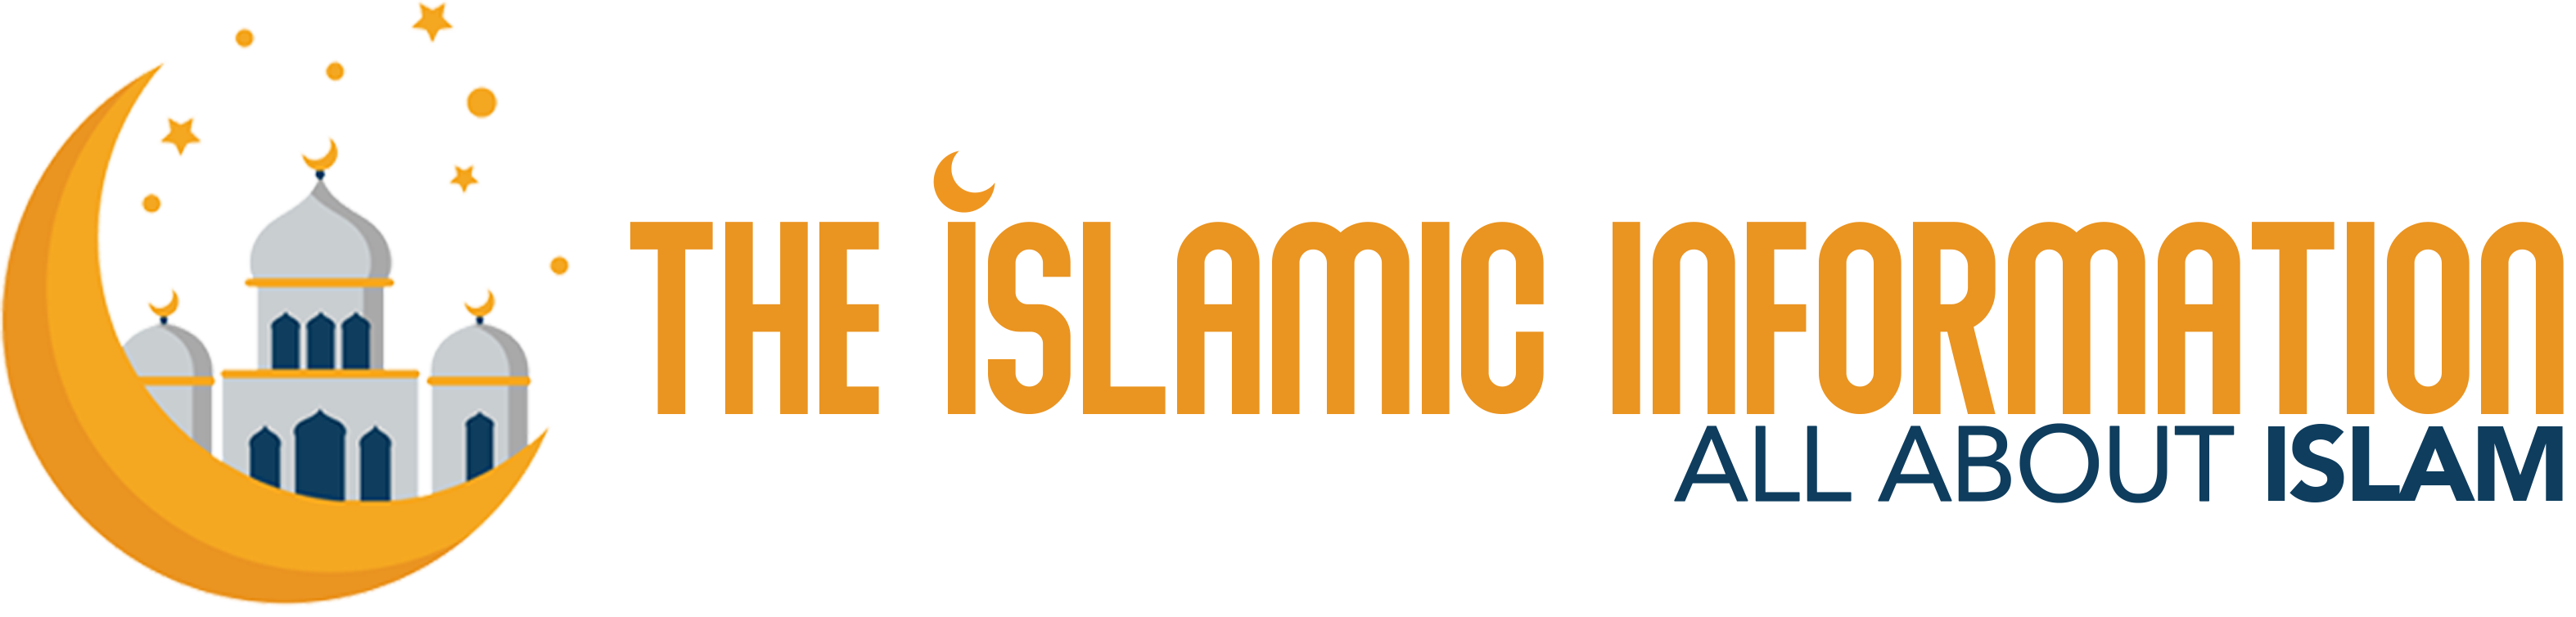 The Islamic Information